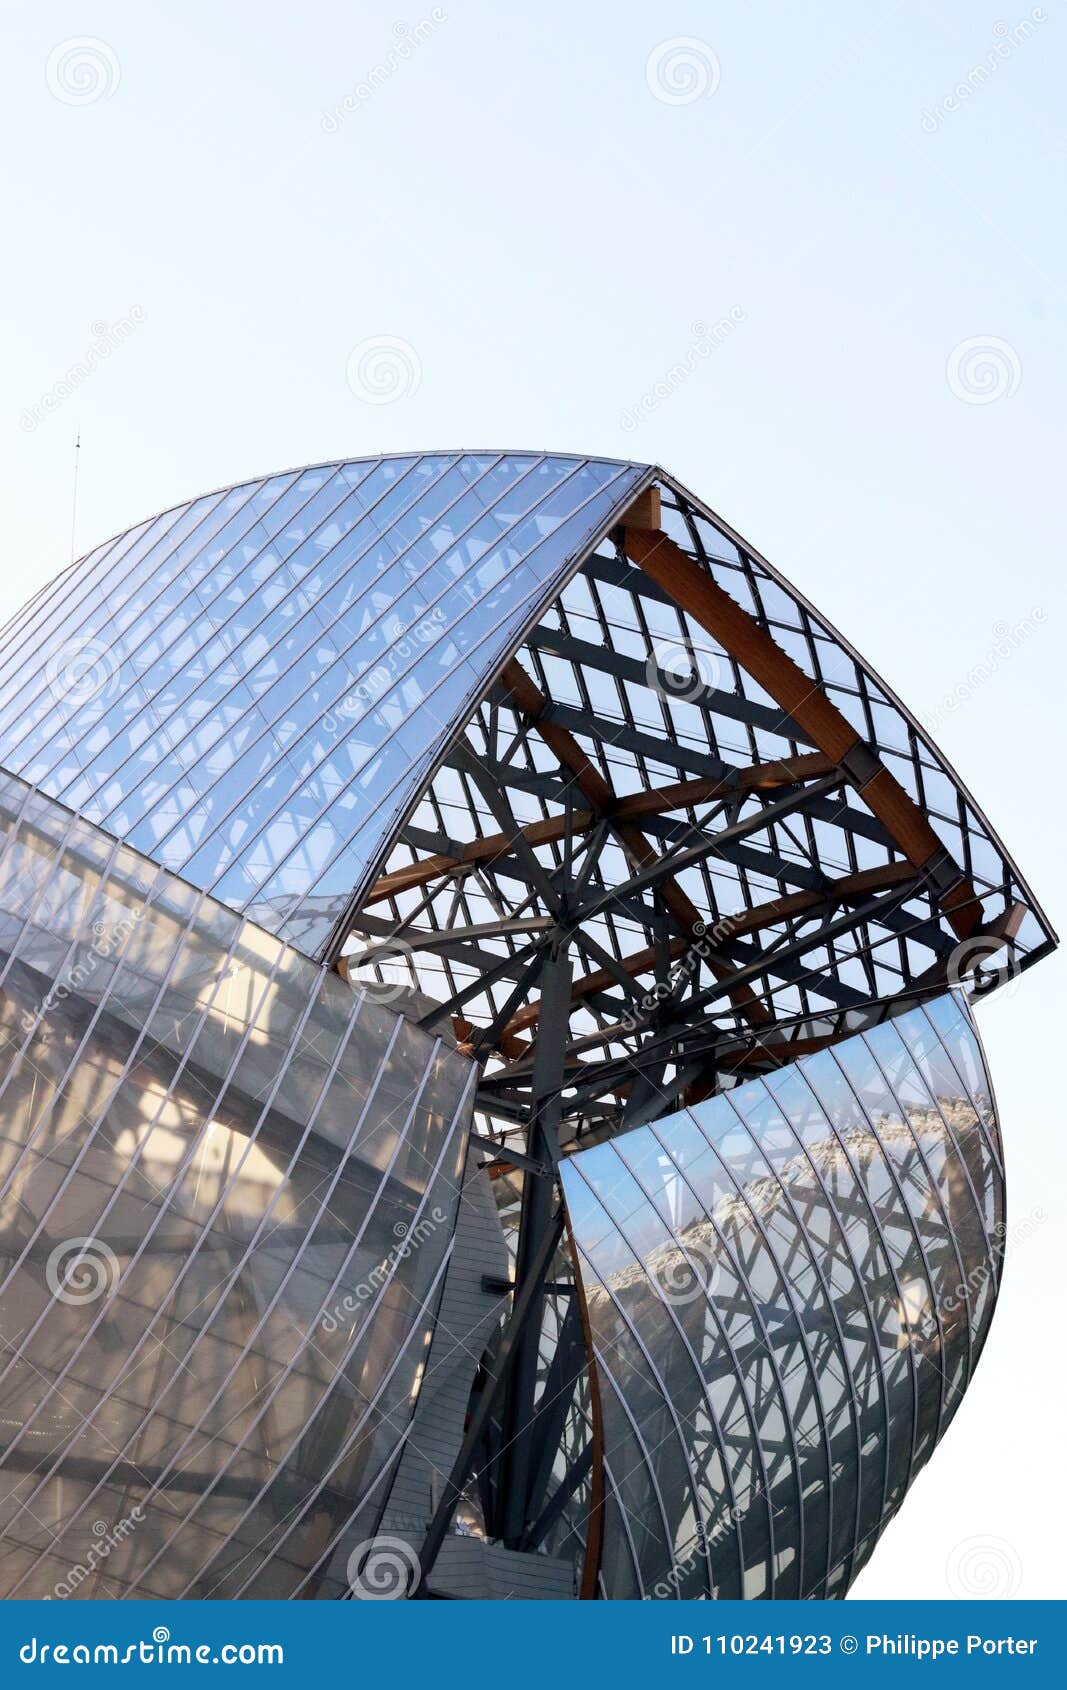 Building of Louis Vuitton in Paris Editorial Stock Image - Image